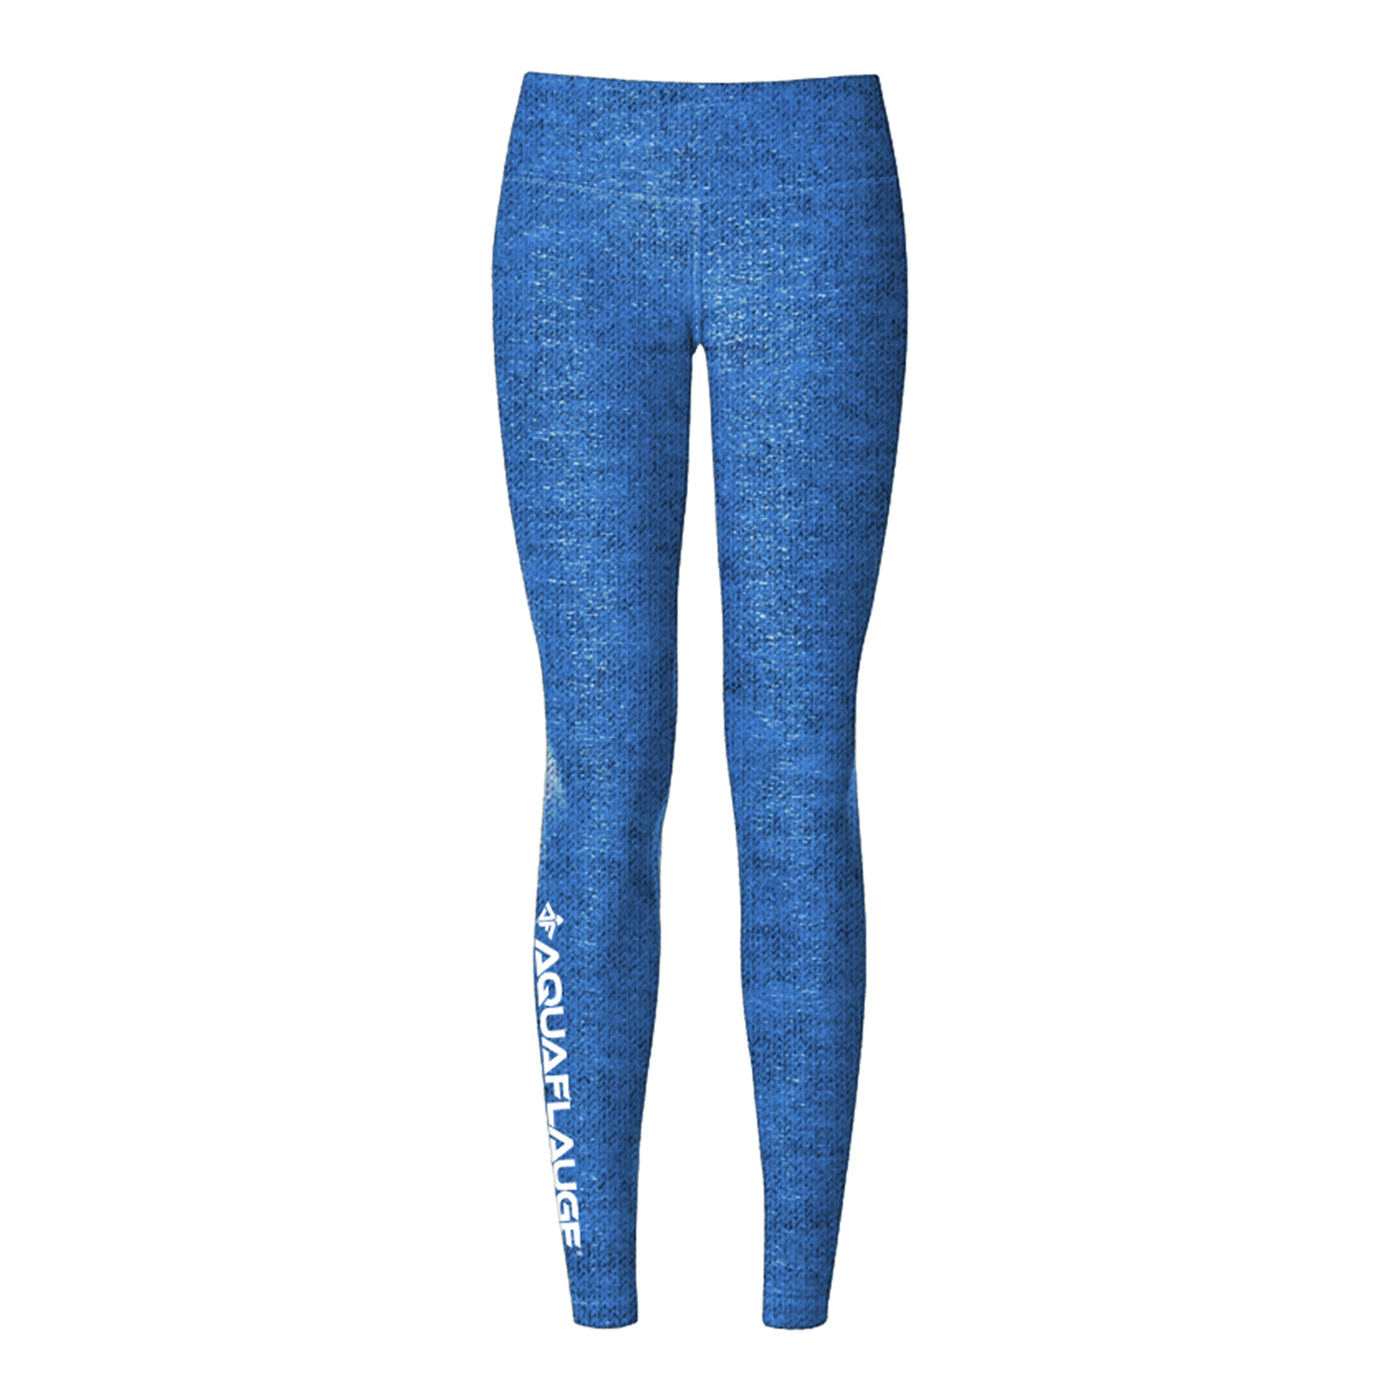 Blue Heathered Yoga Pants - Women's